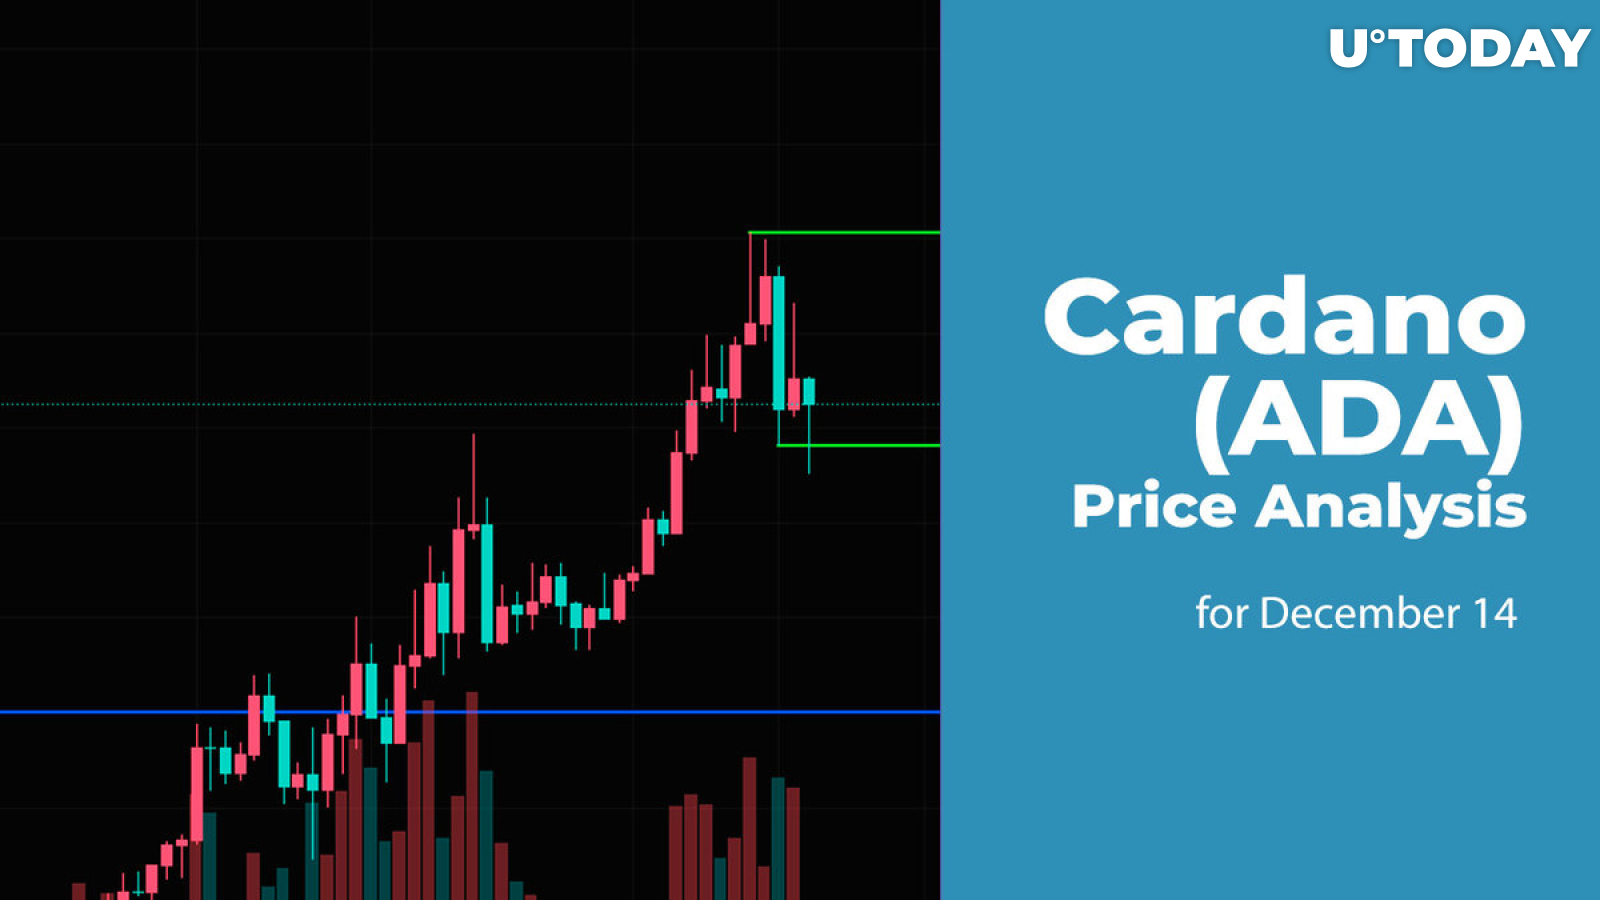 Cardano (ADA) Price Analysis for December 14